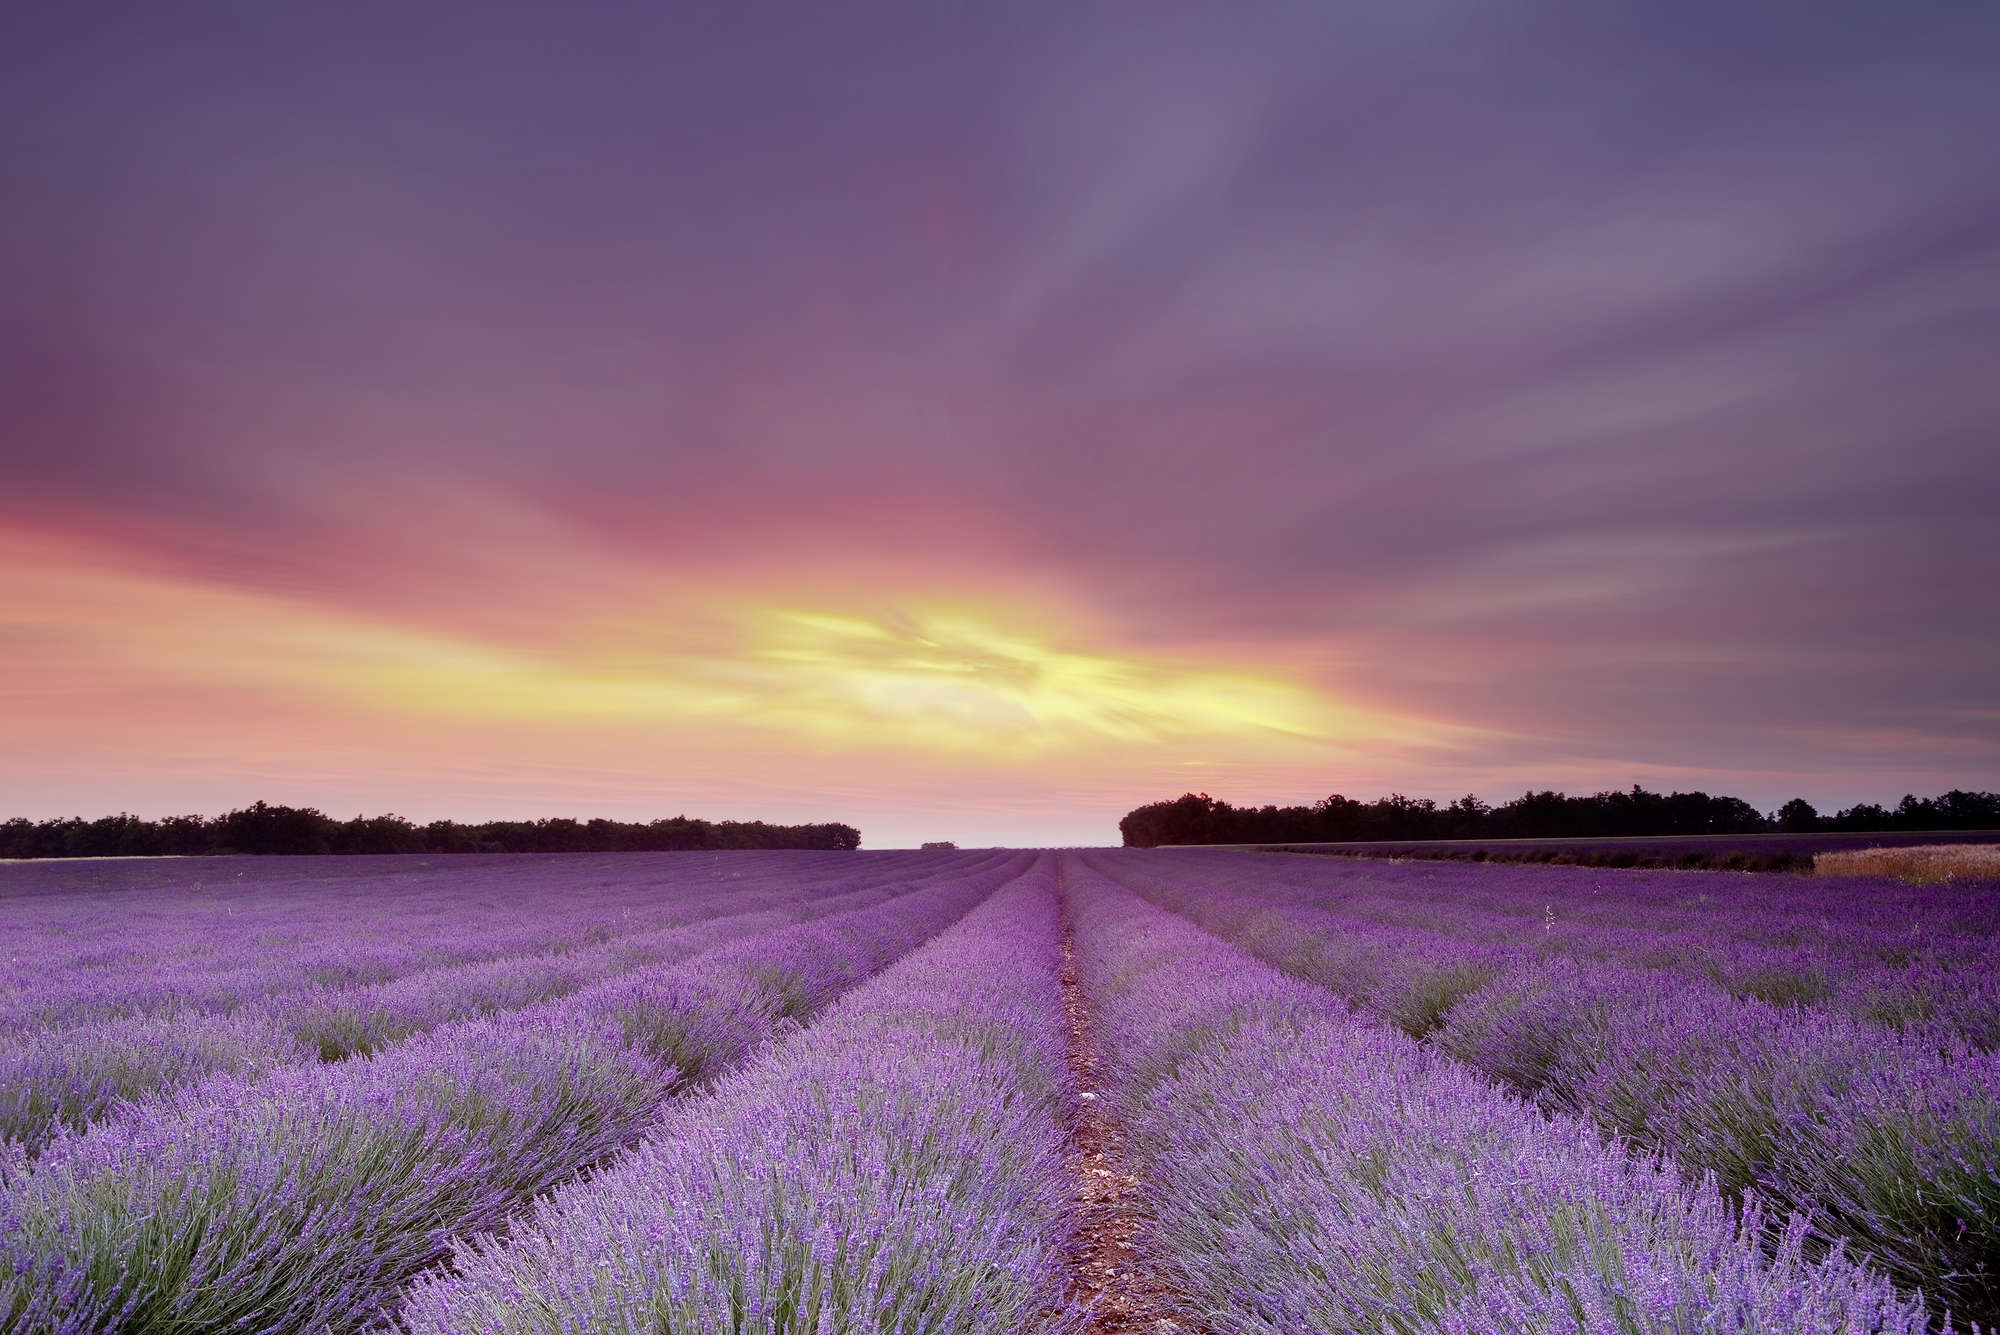             Nature Wallpaper Lavender Field in Sunset - Matt Smooth Non-woven
        